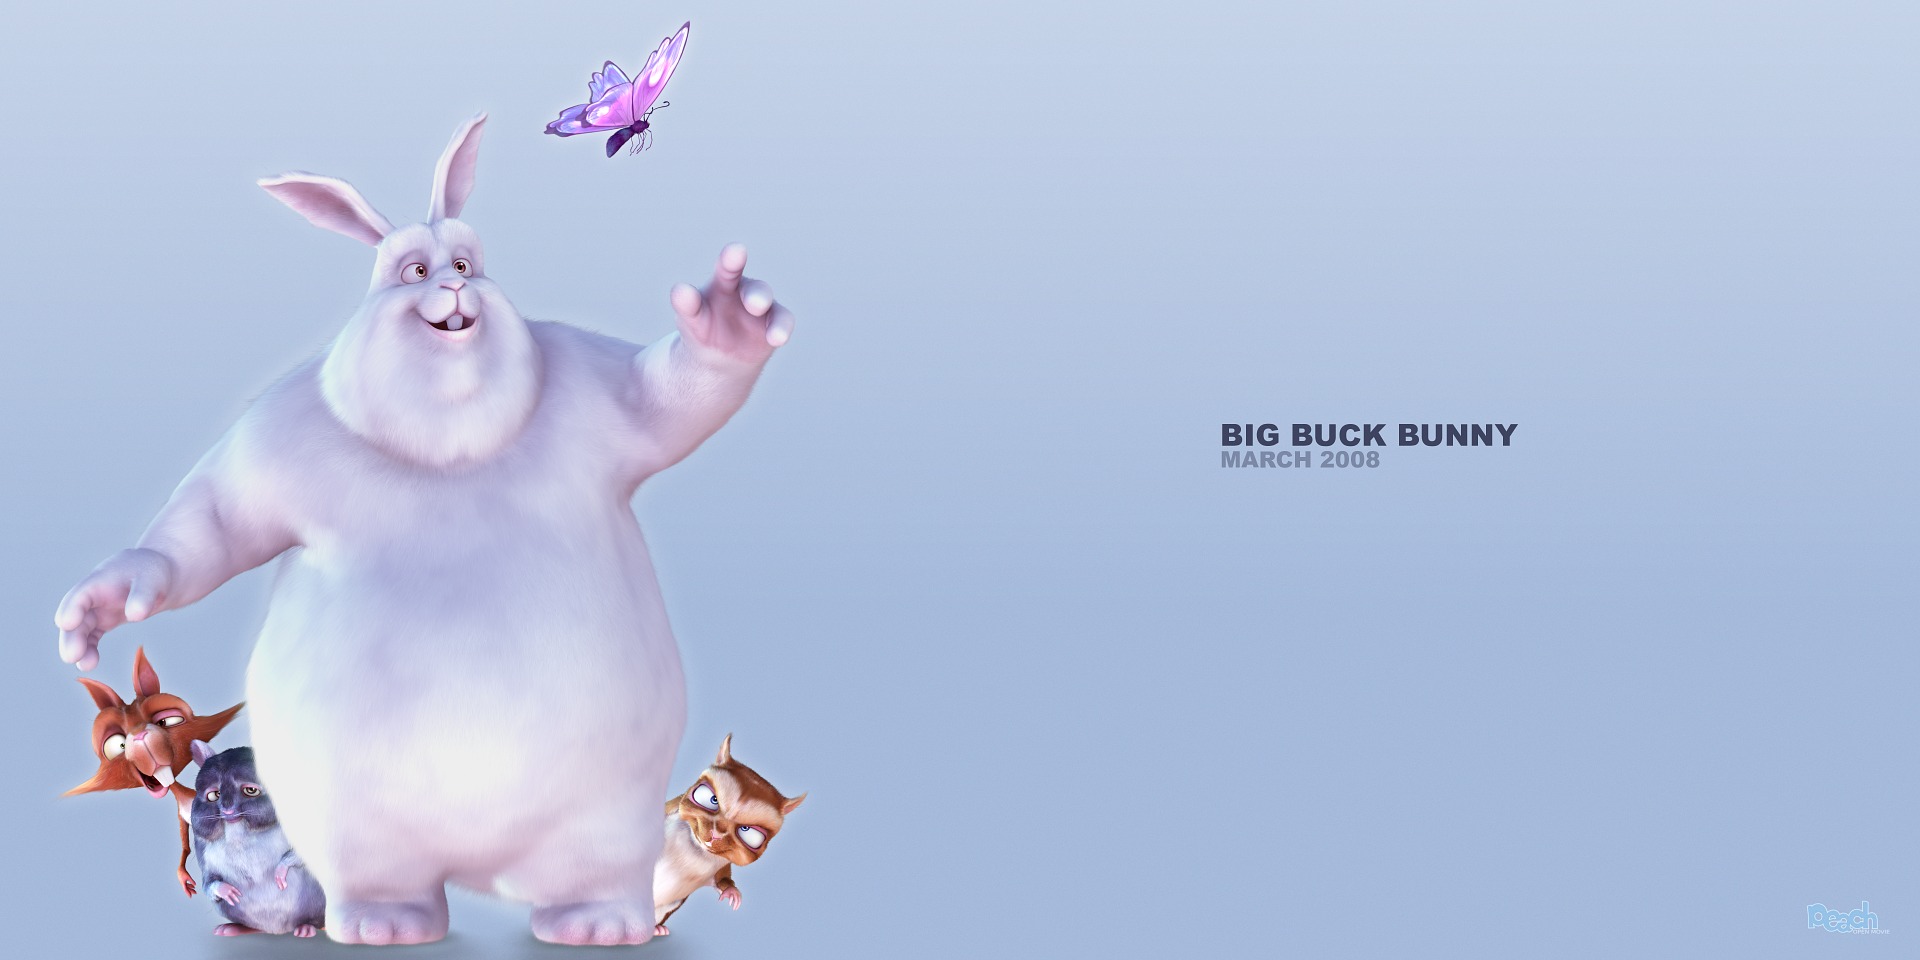 Big Buck Bunny Movie Review